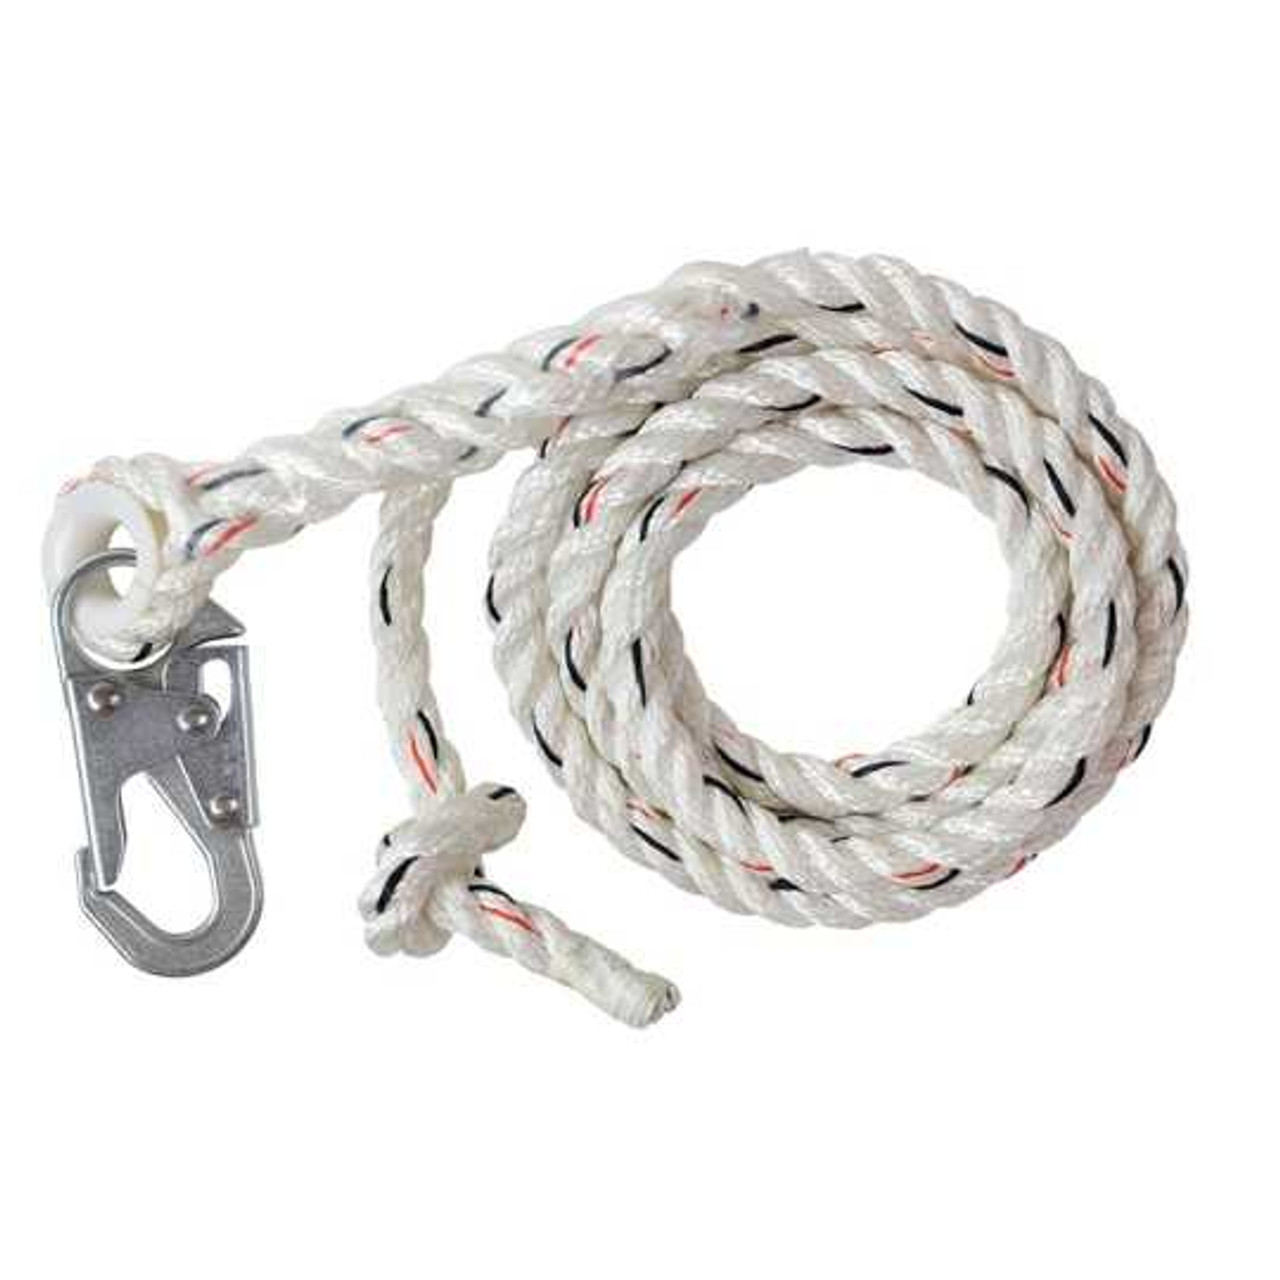 Vertical Lifeline w/Snap Hook Rope Size: 25